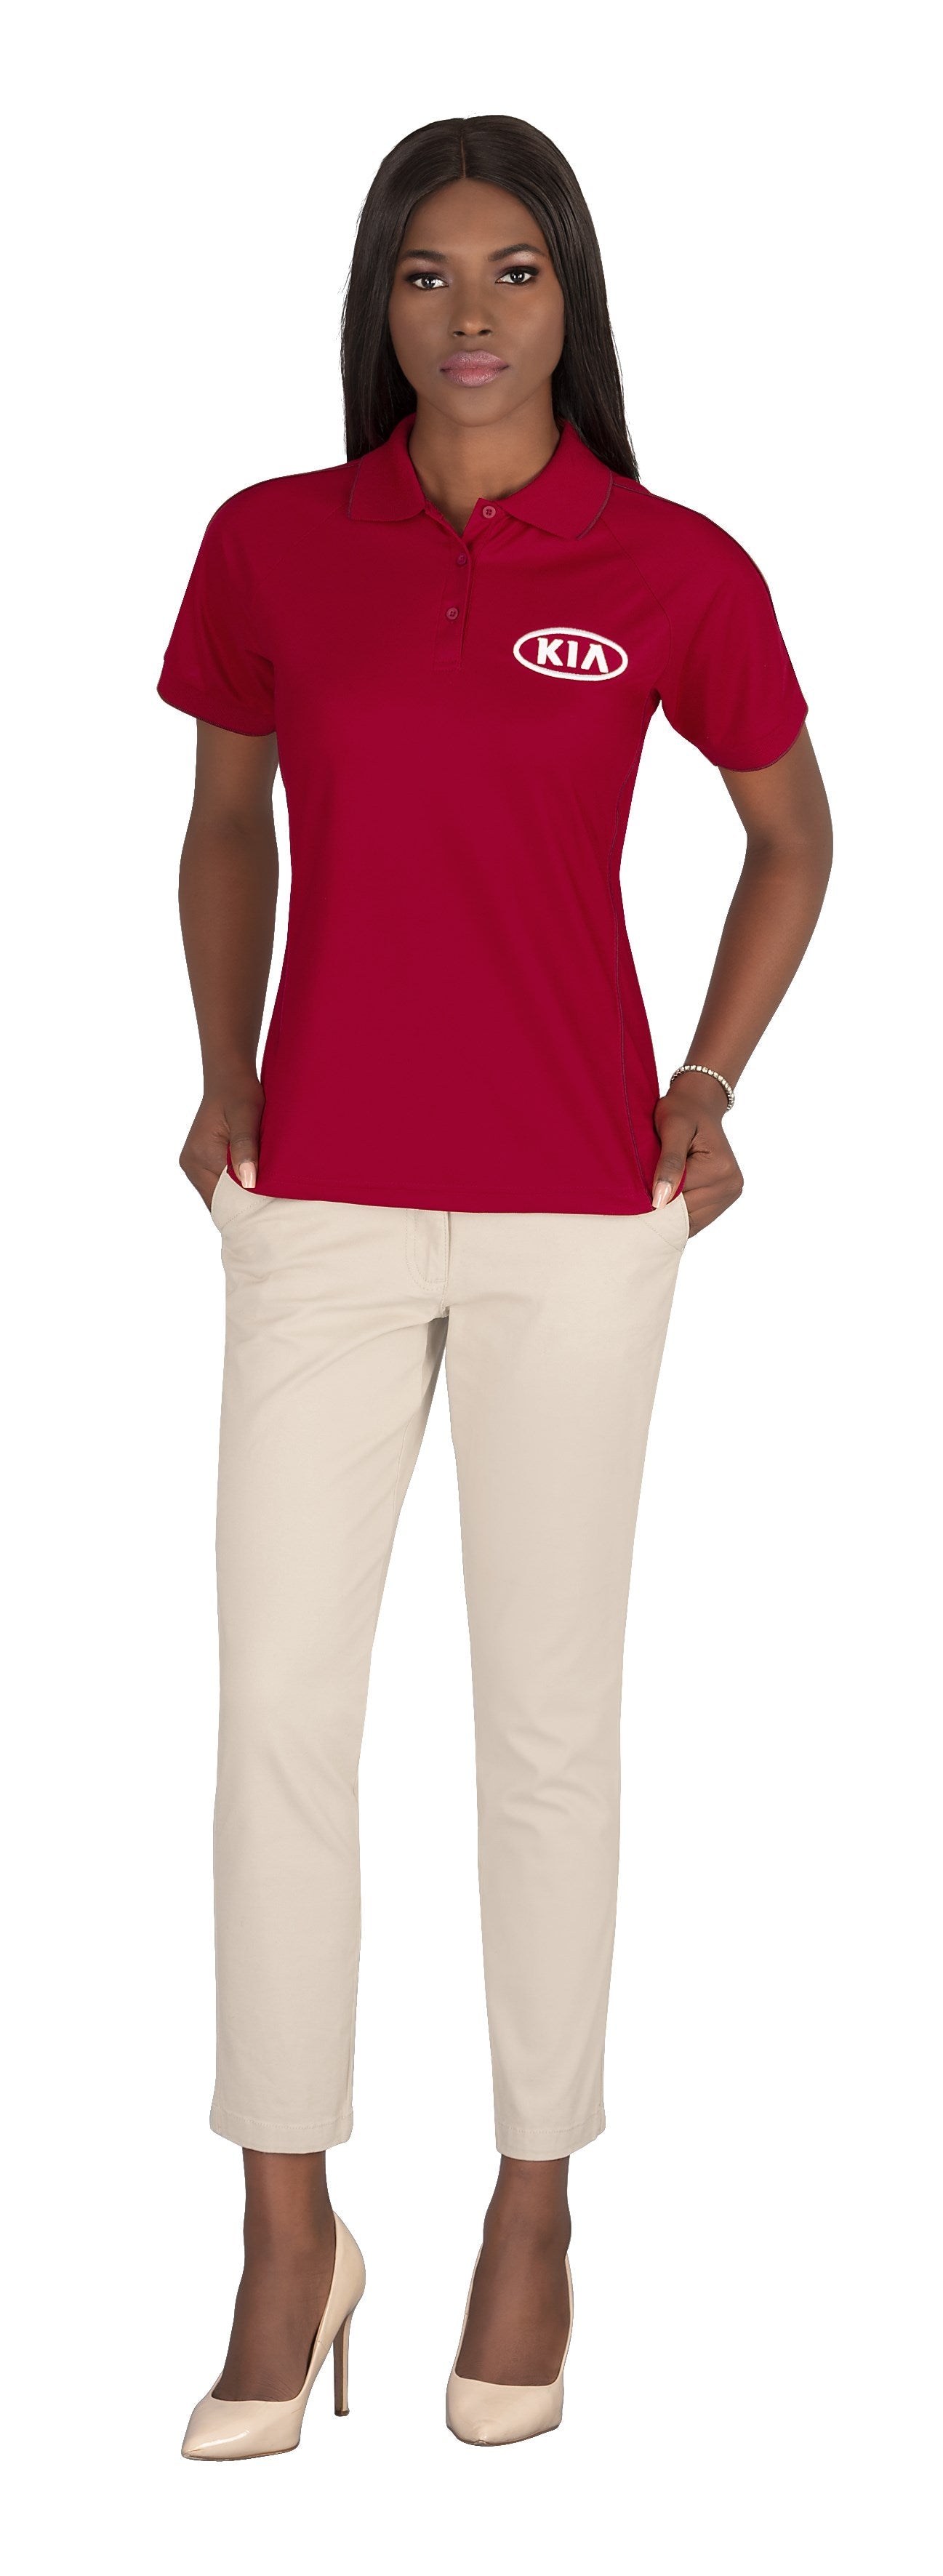 Ladies Resort Golf Shirt - White Only-L-Red-R